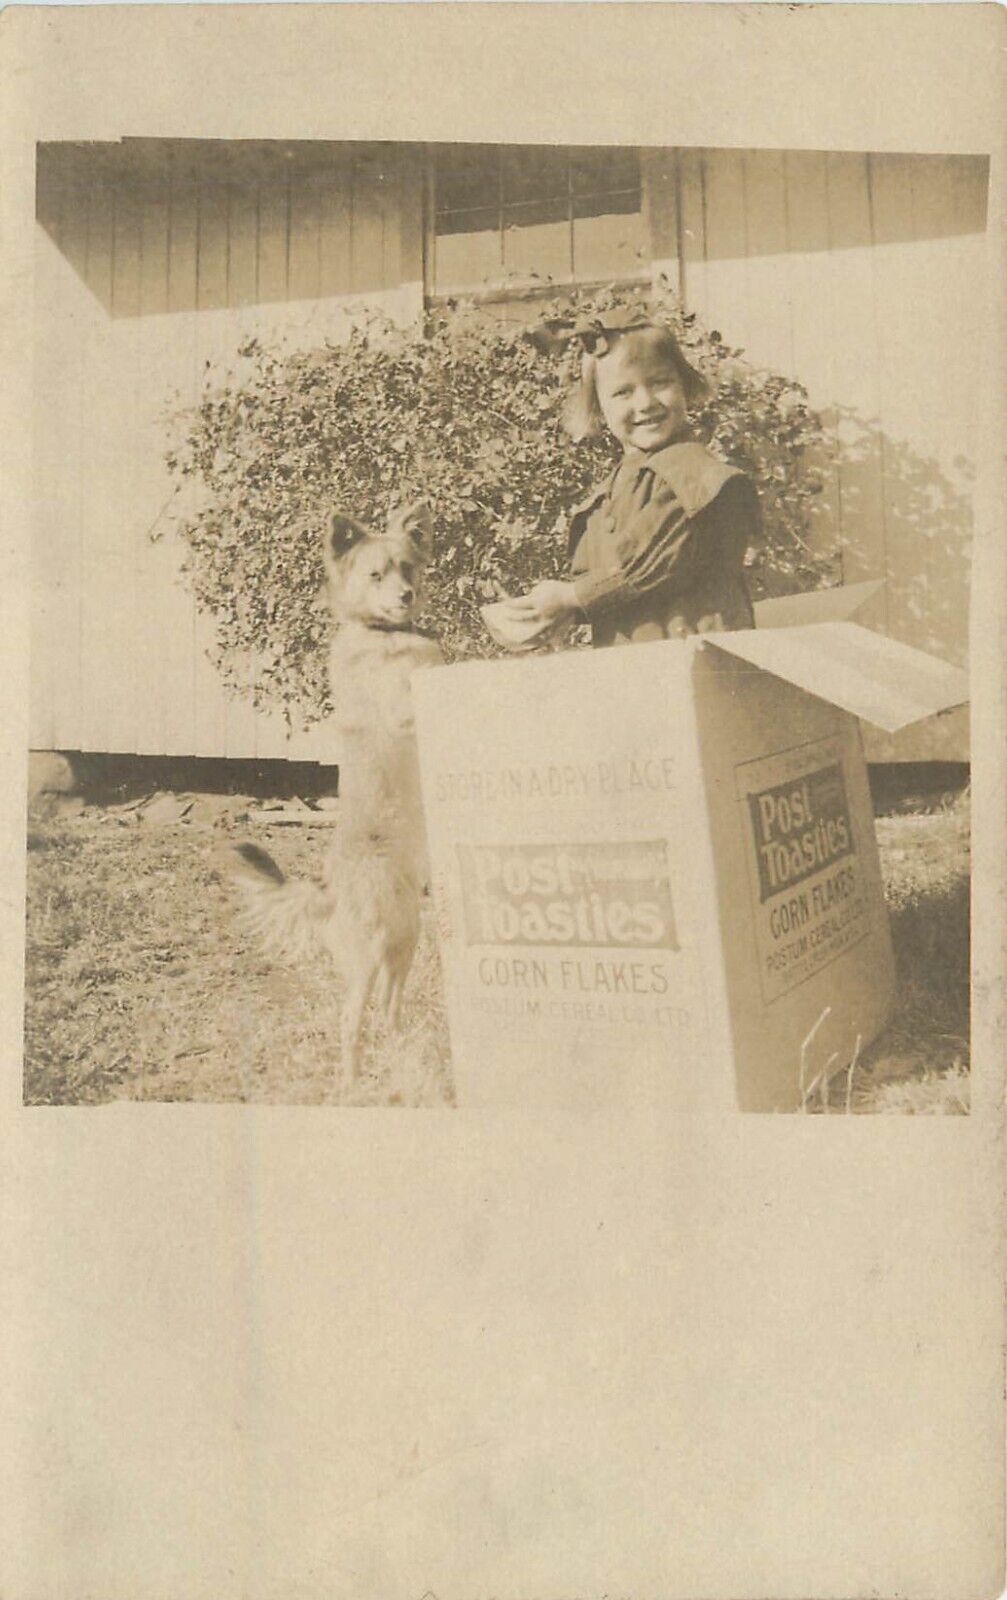 c1907 RPPC Postcard; Girl in Big Post Toasties Box, Terrier Dog Standing Up